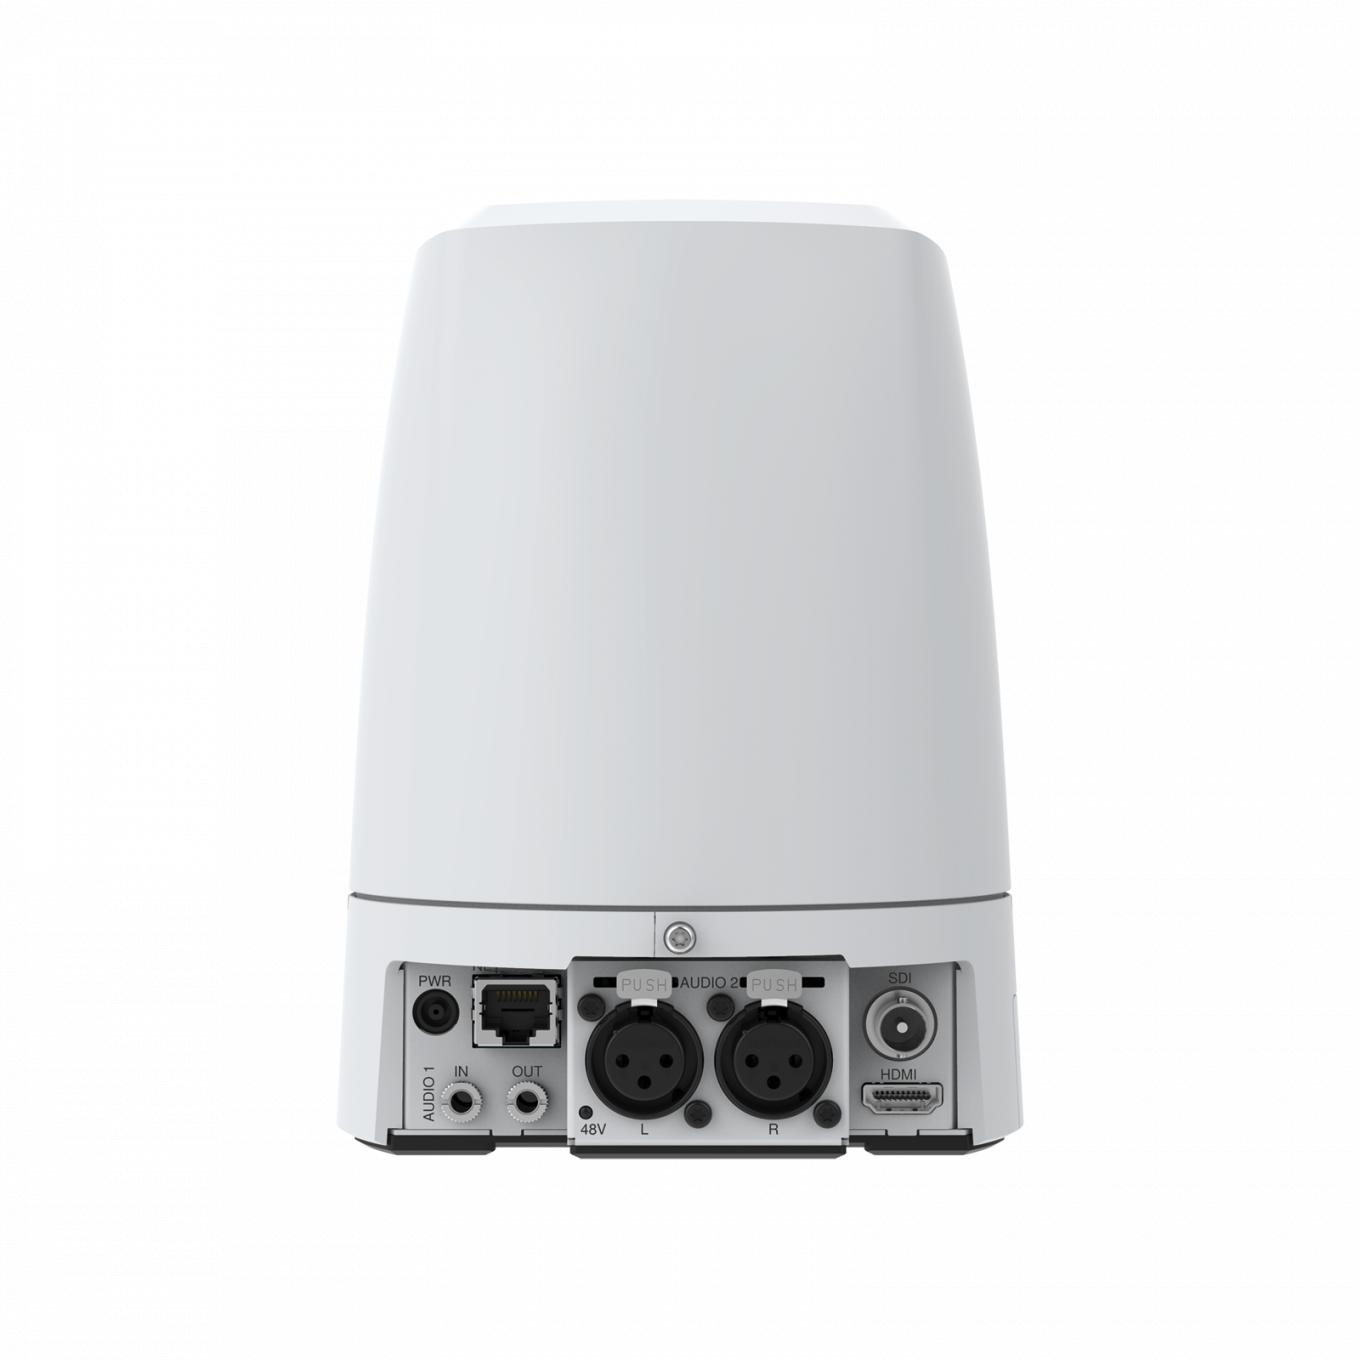 AXIS V5925 PTZ Network Camera provides VISCA and VISCA over IP support